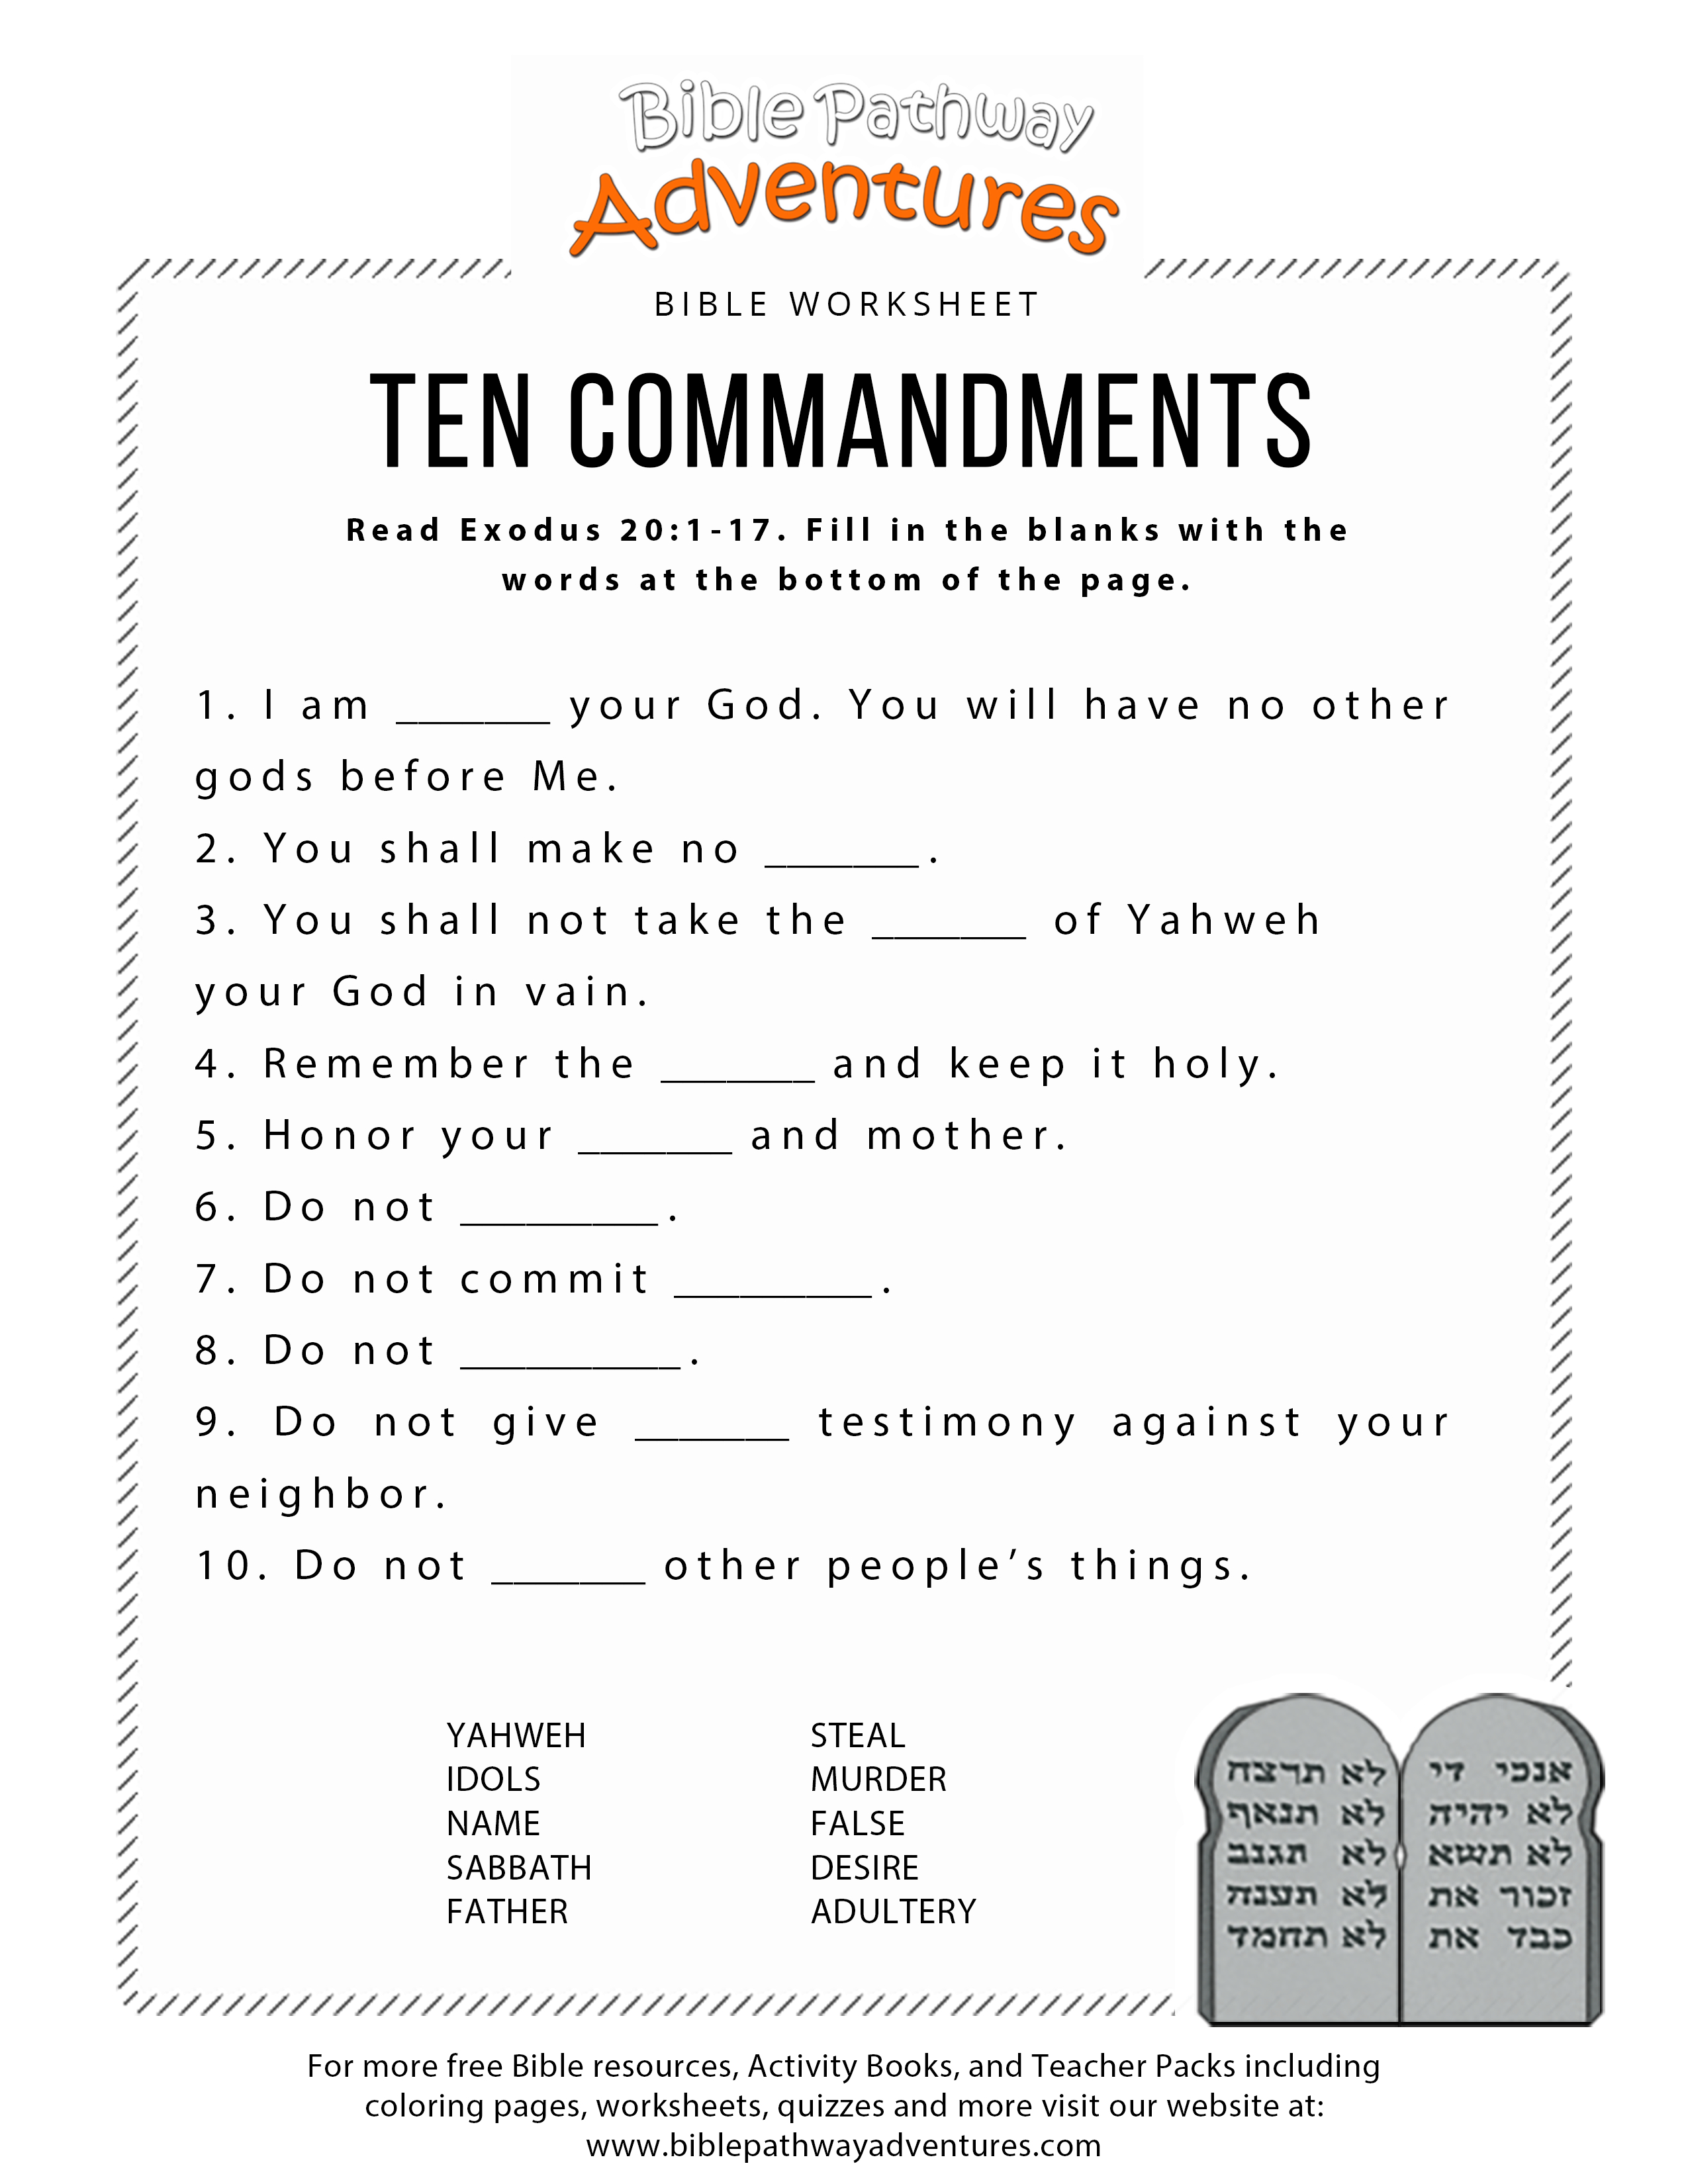 Ten Commandments Worksheet For Kids | Worksheets For Psr | Bible - Free Printable Ten Commandments Coloring Pages